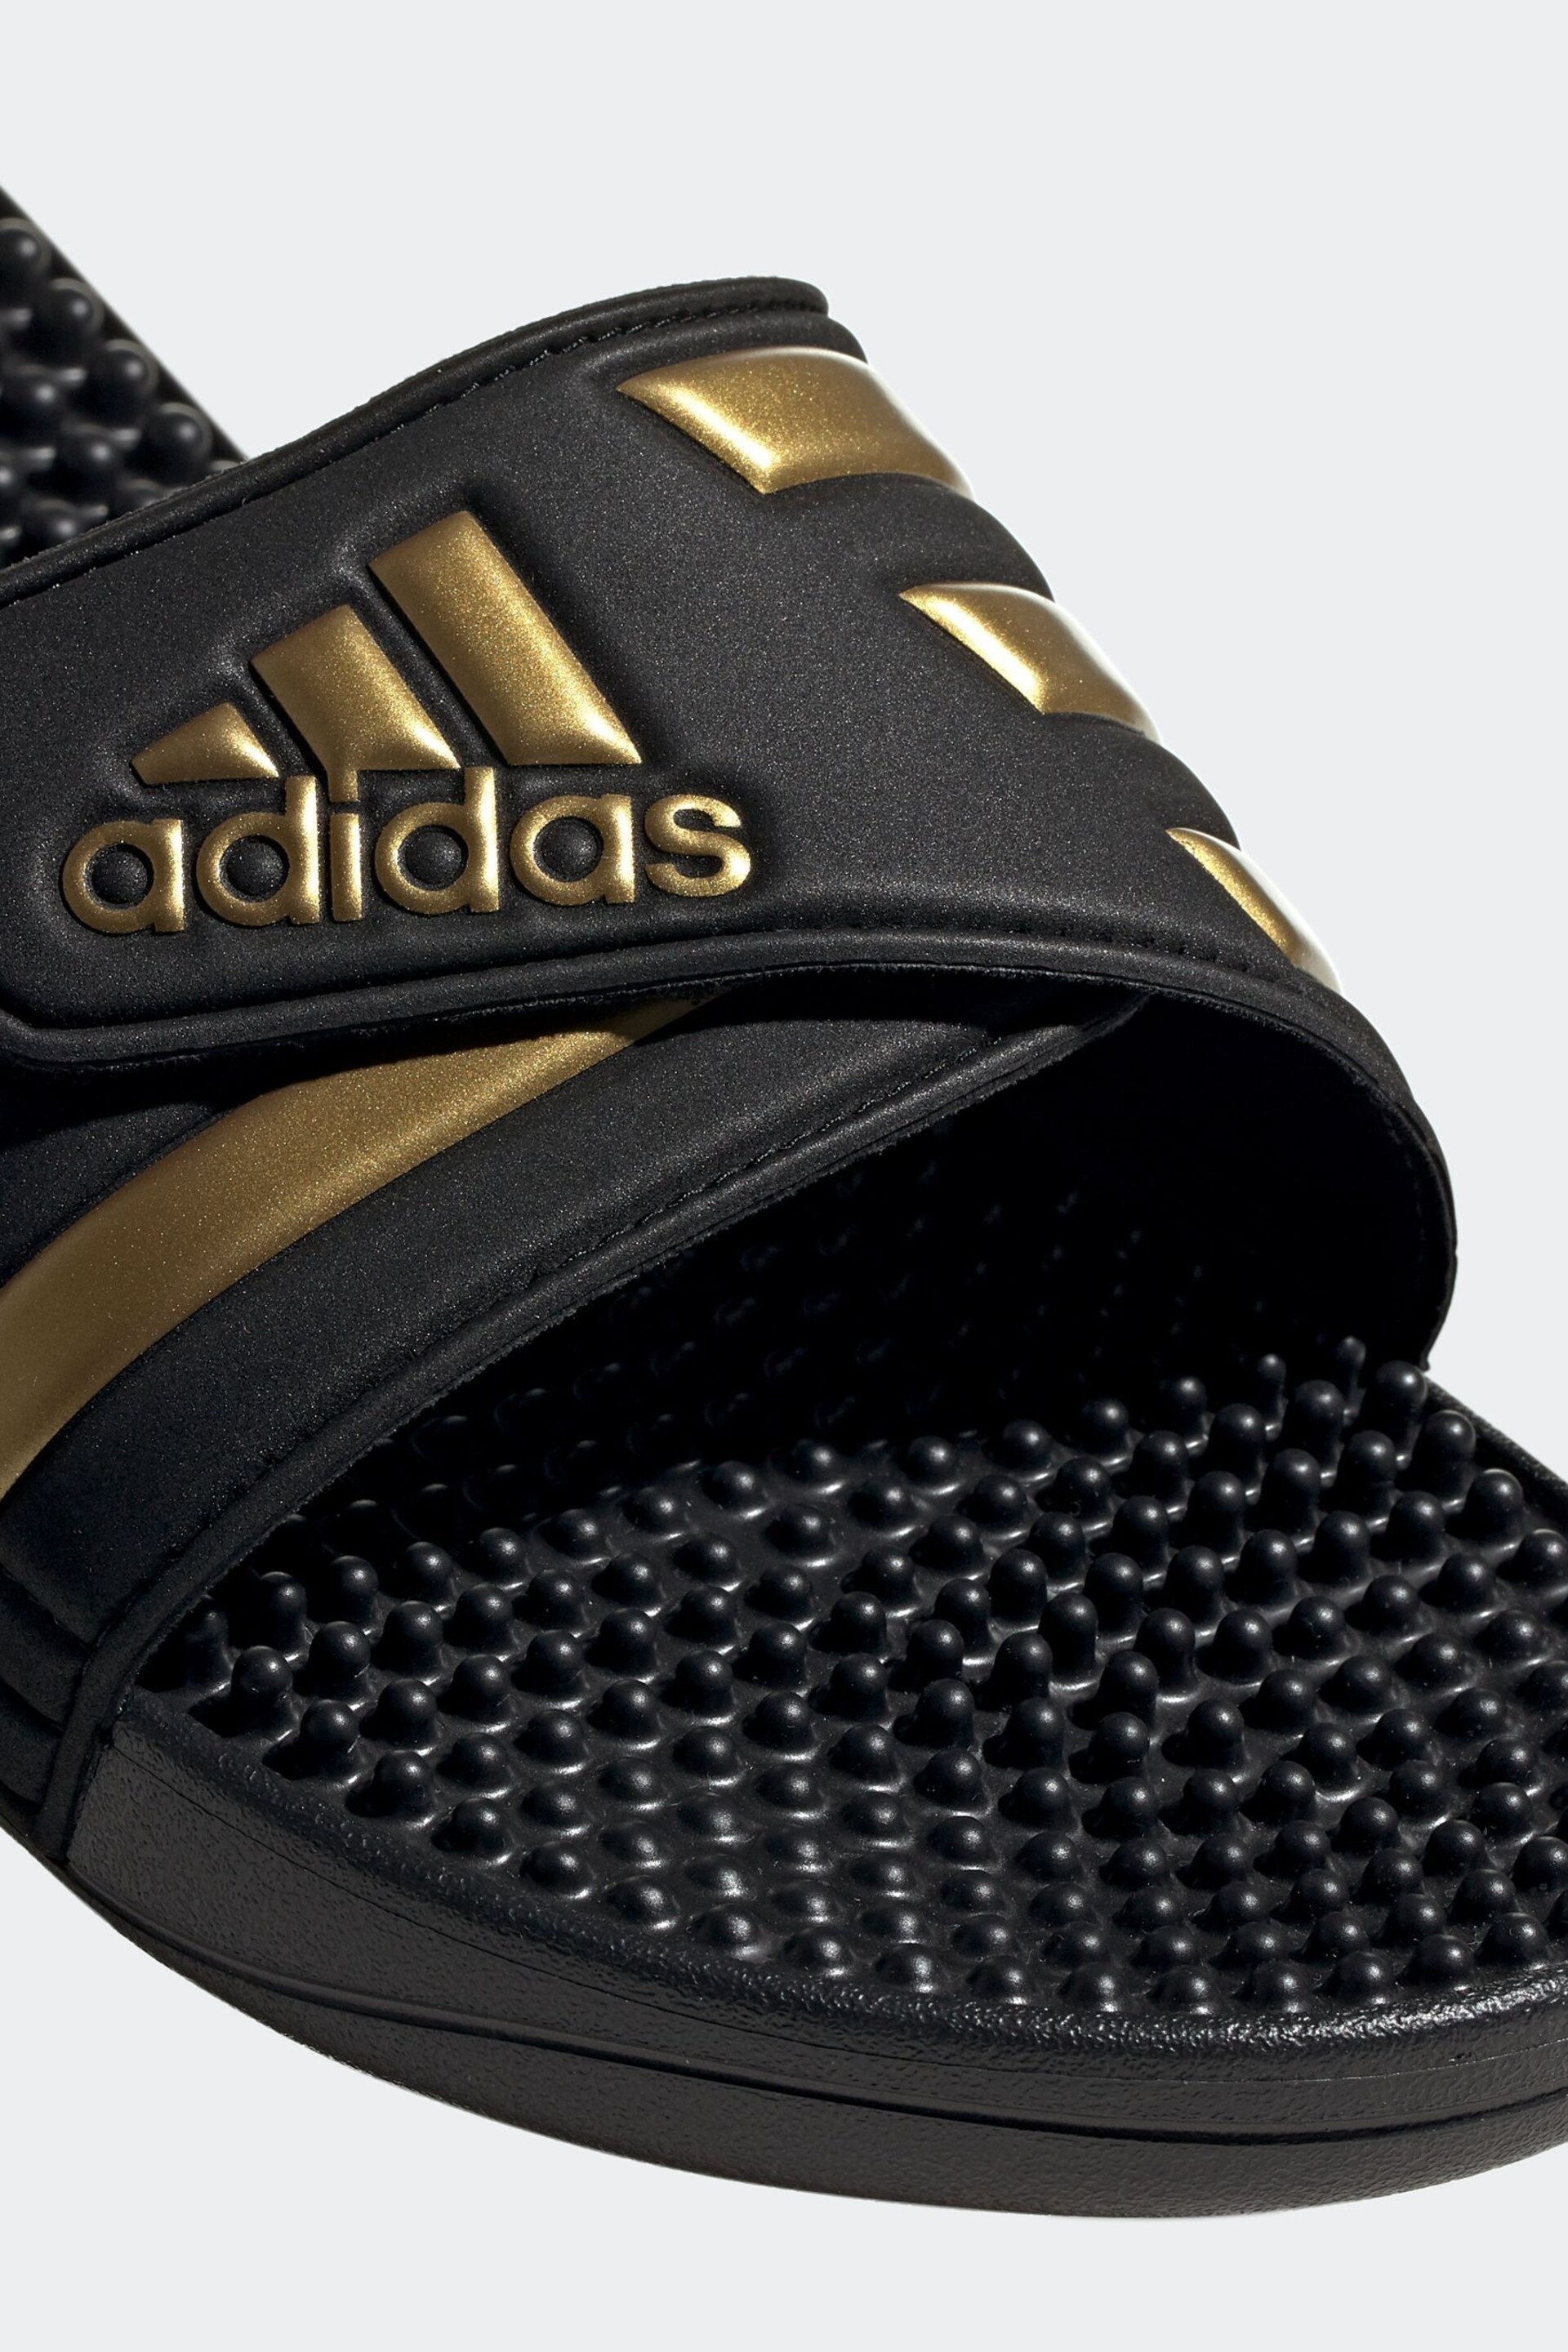 adidas Dark Black Sportswear Adissage Slides - Image 6 of 6